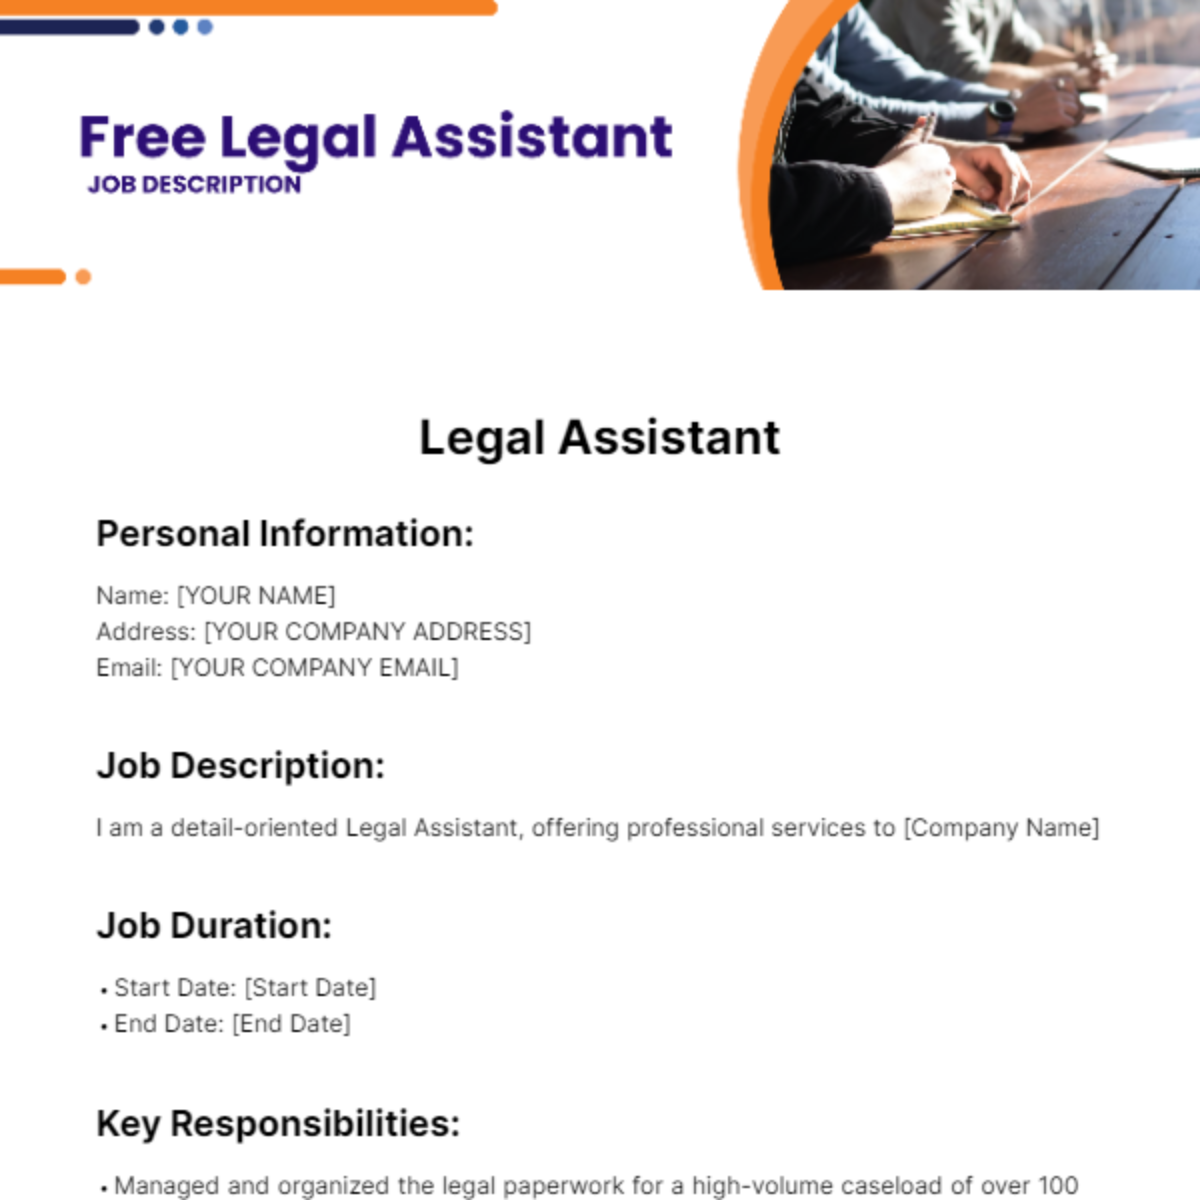 Free Legal Assistant Job Description for Resume Template